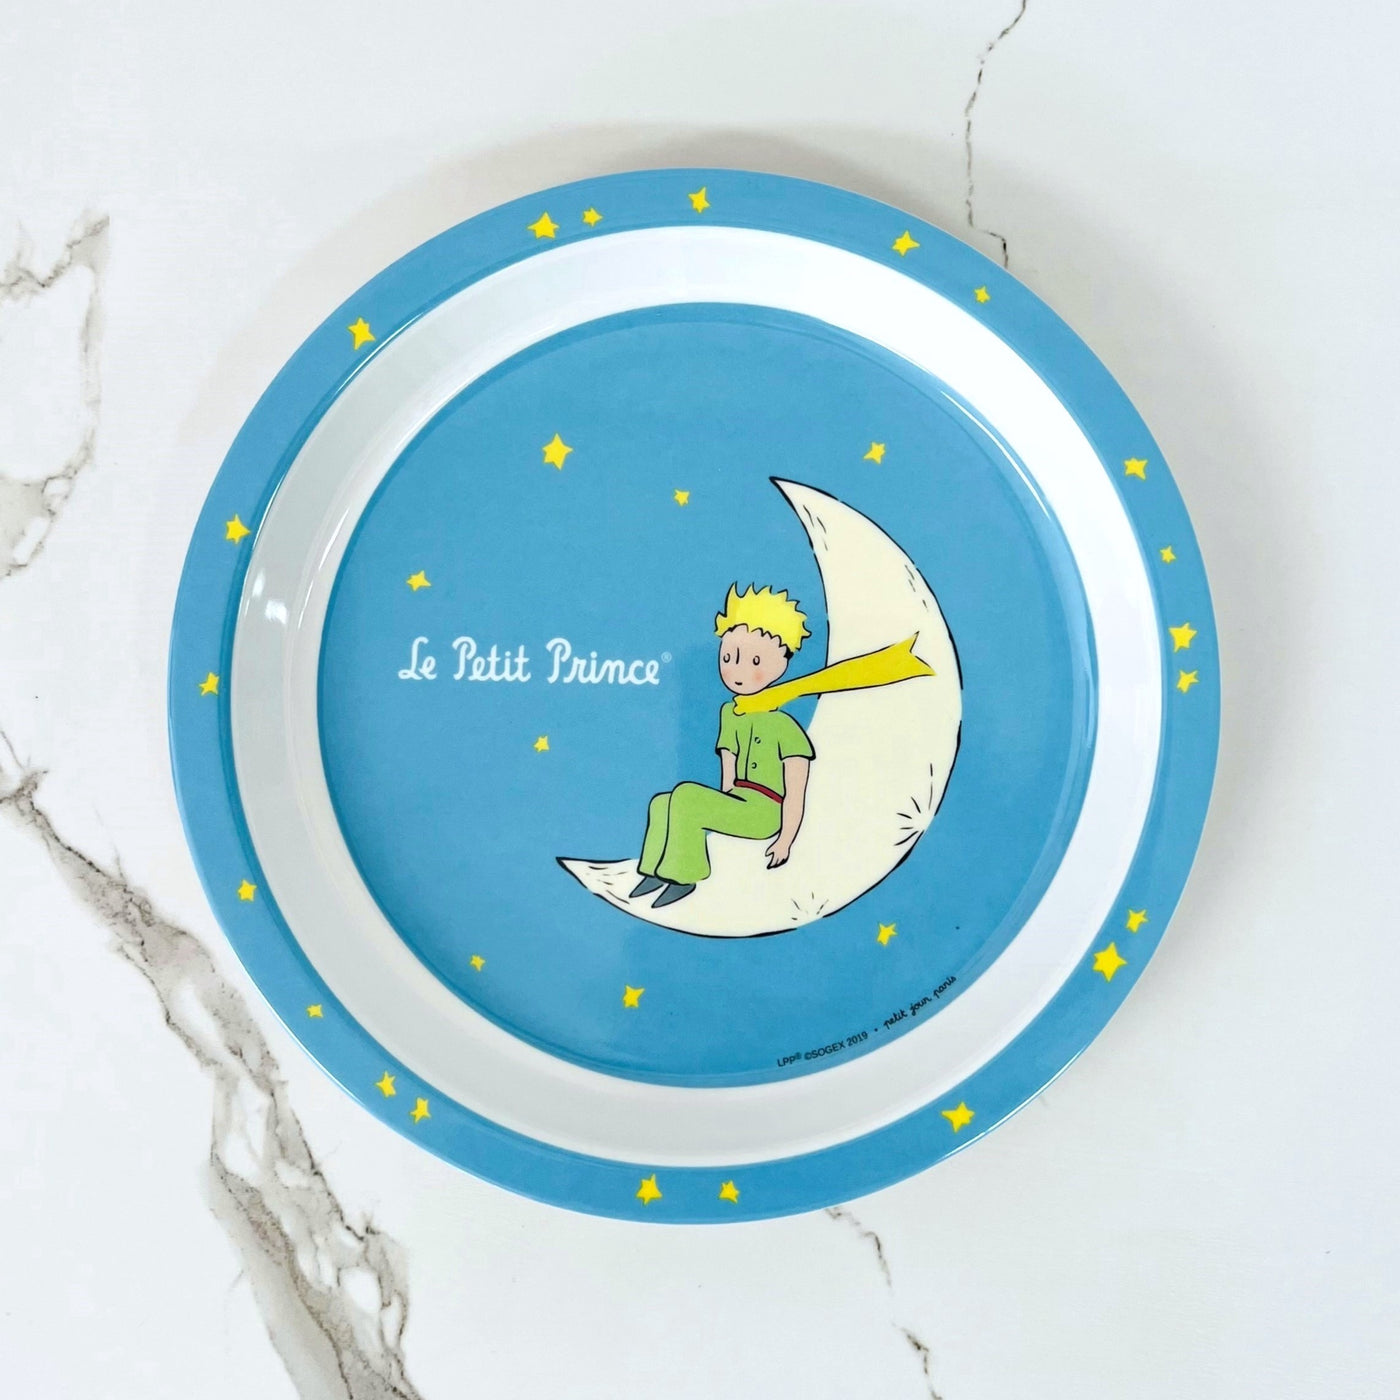 Le Petit Prince (The Little Prince) - Plate